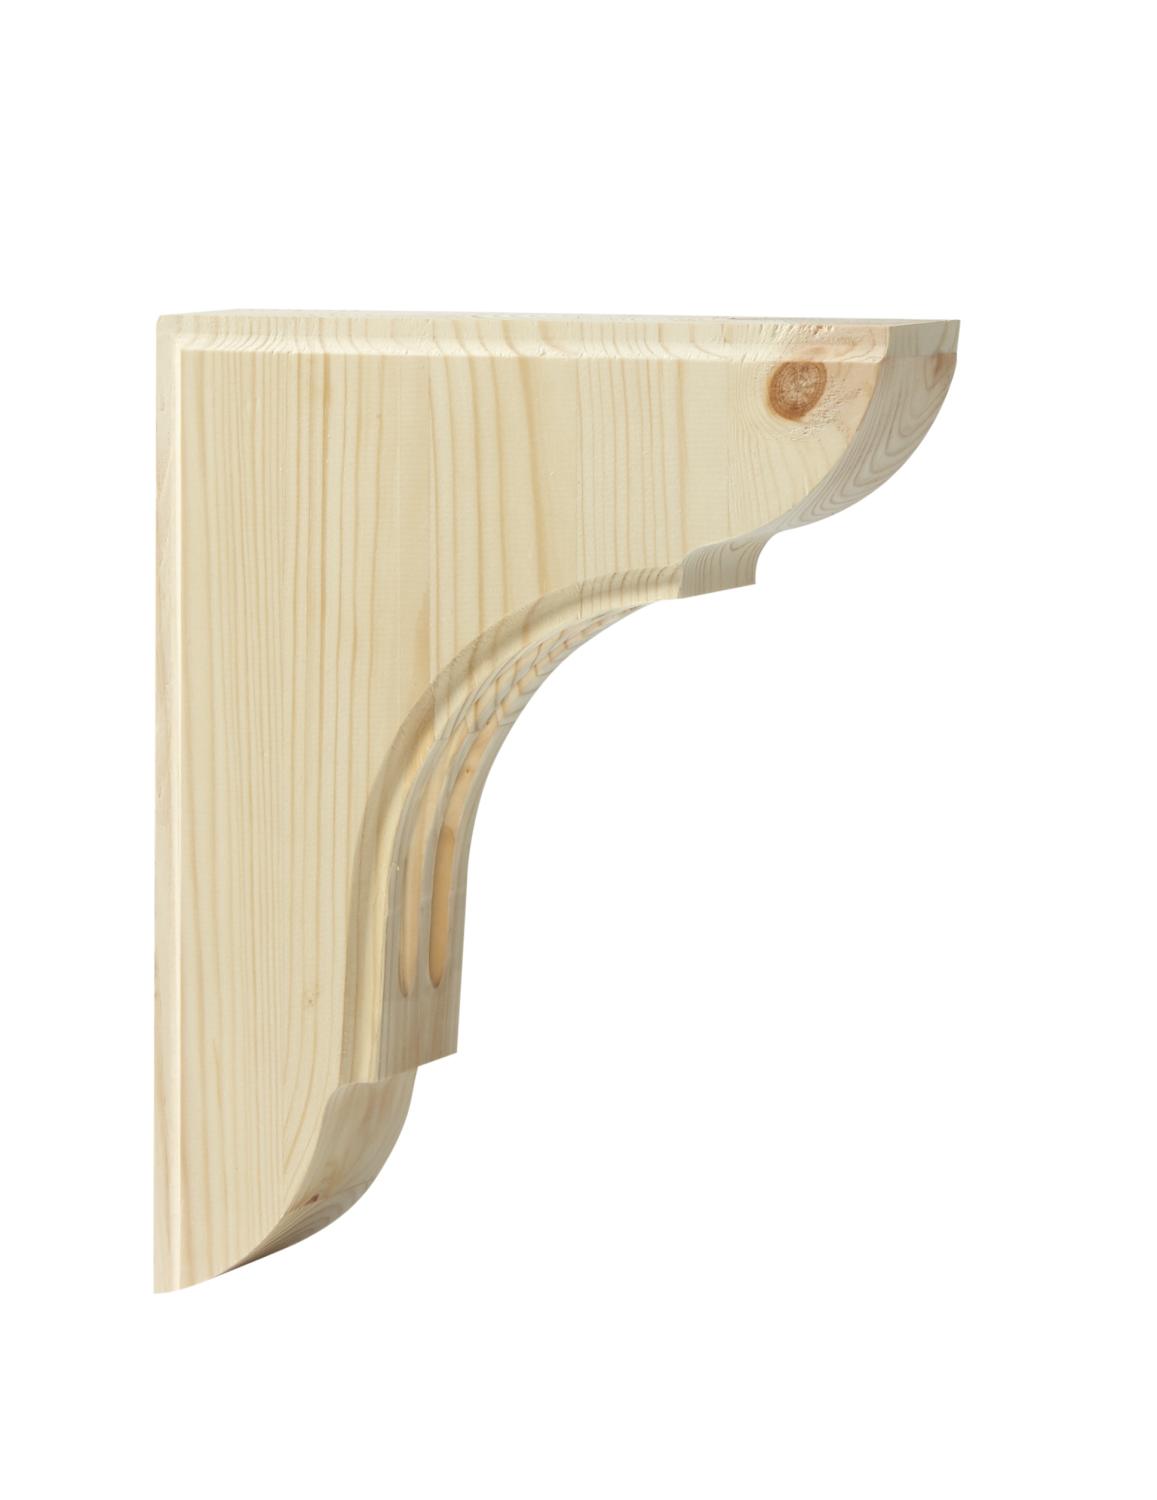 Old-fashioned wooden shelf bracket in pine - Model 307 - Wooden bracket in vintage style for shelving - old style